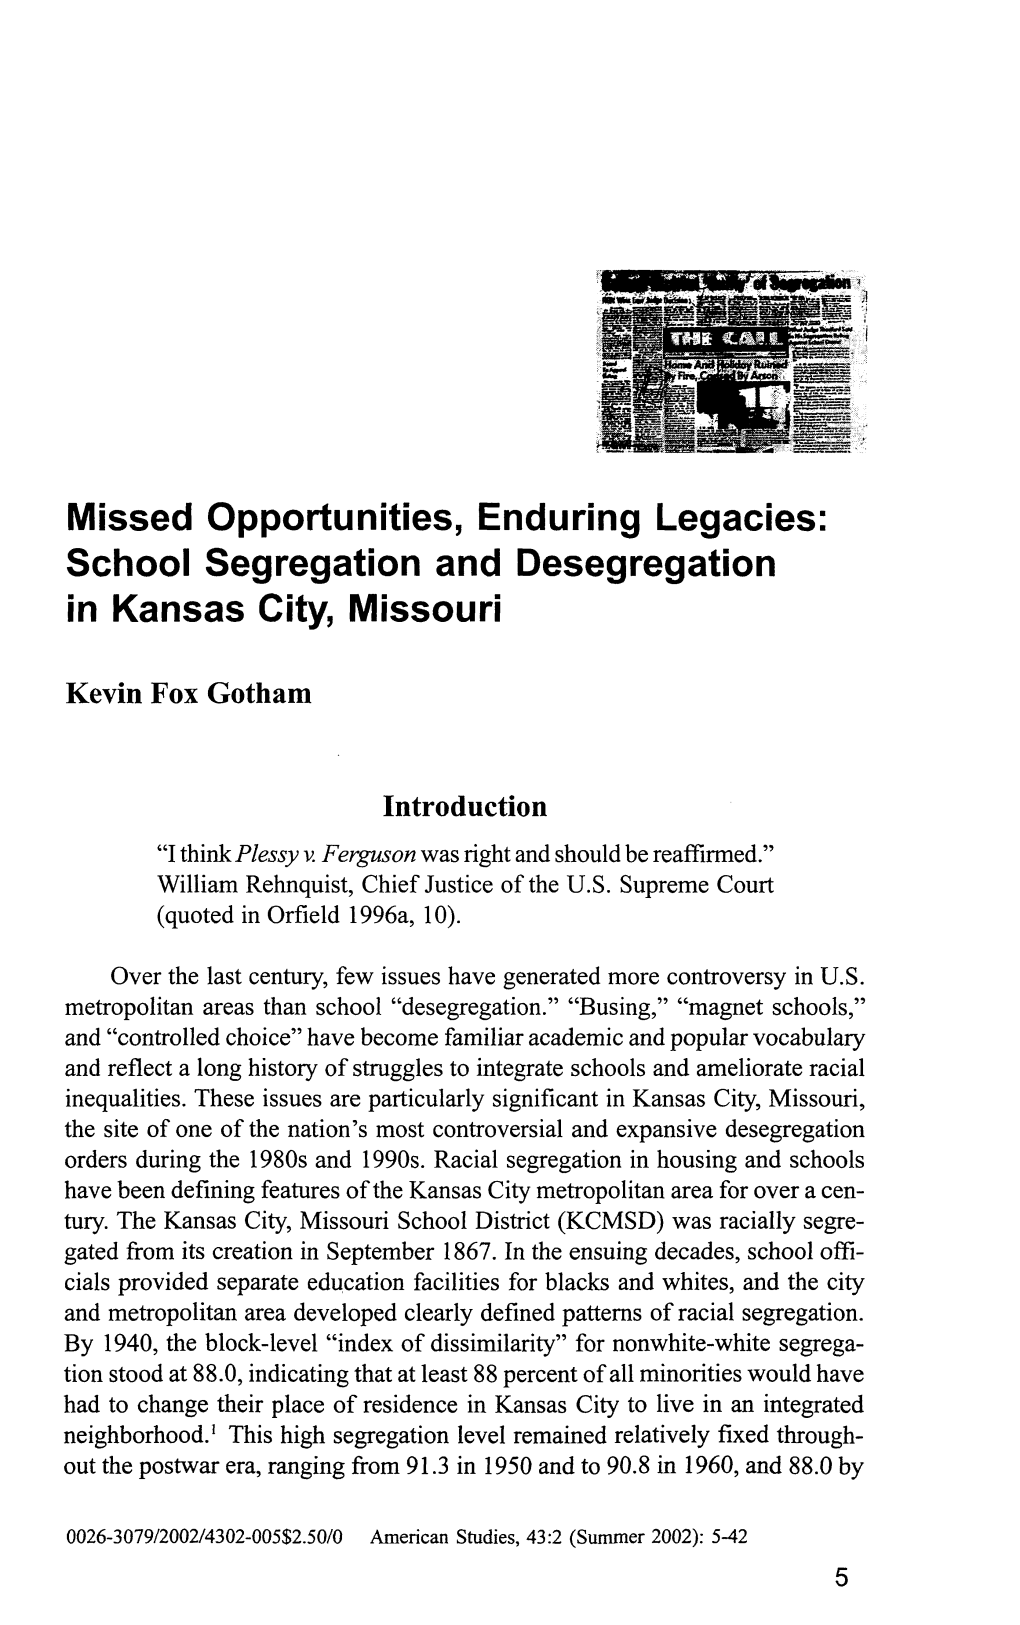 Missed Opportunities, Enduring Legacies: School Segregation and Desegregation in Kansas City, Missouri